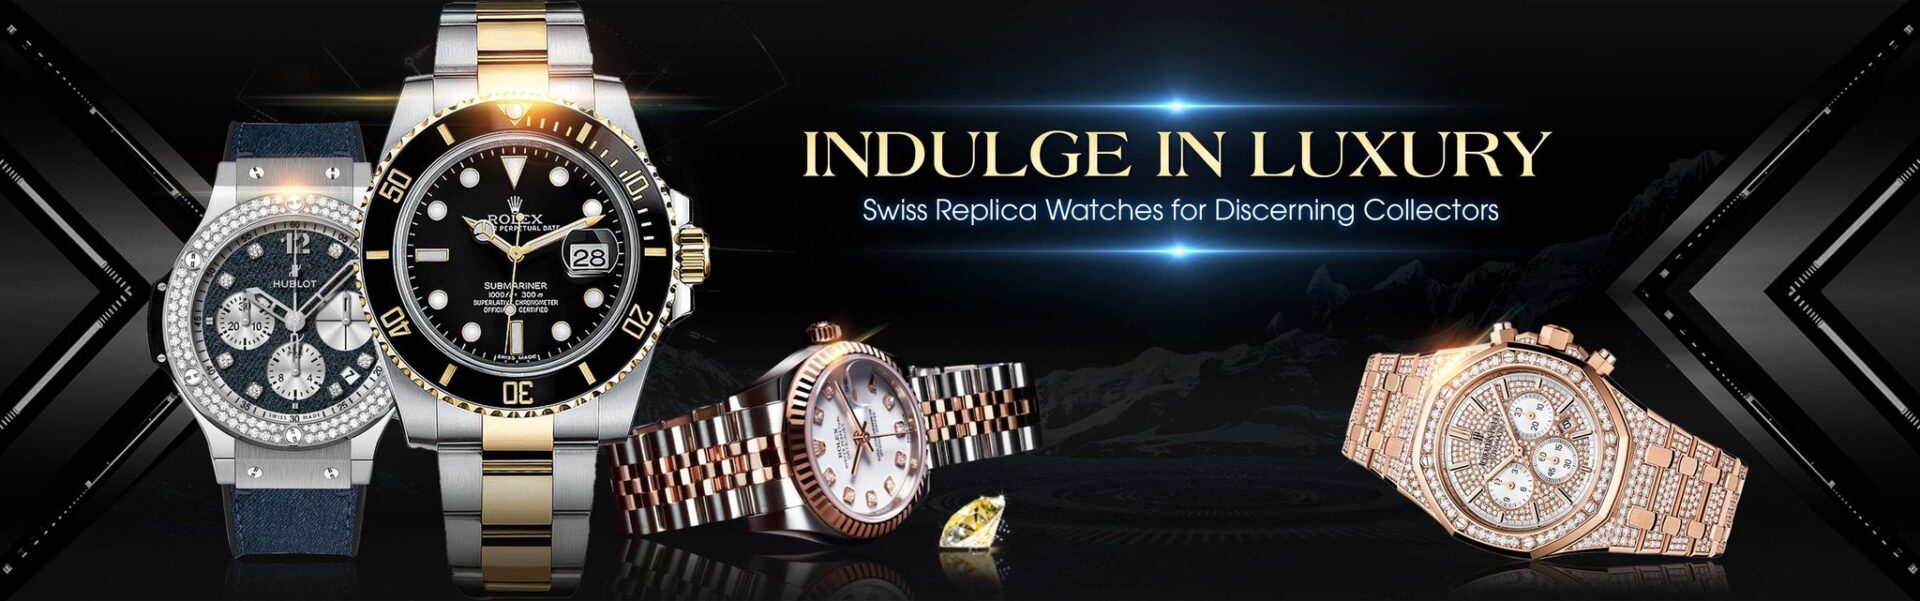 Half of fake watches are Rolex Replicas, Watchfinder CEO says